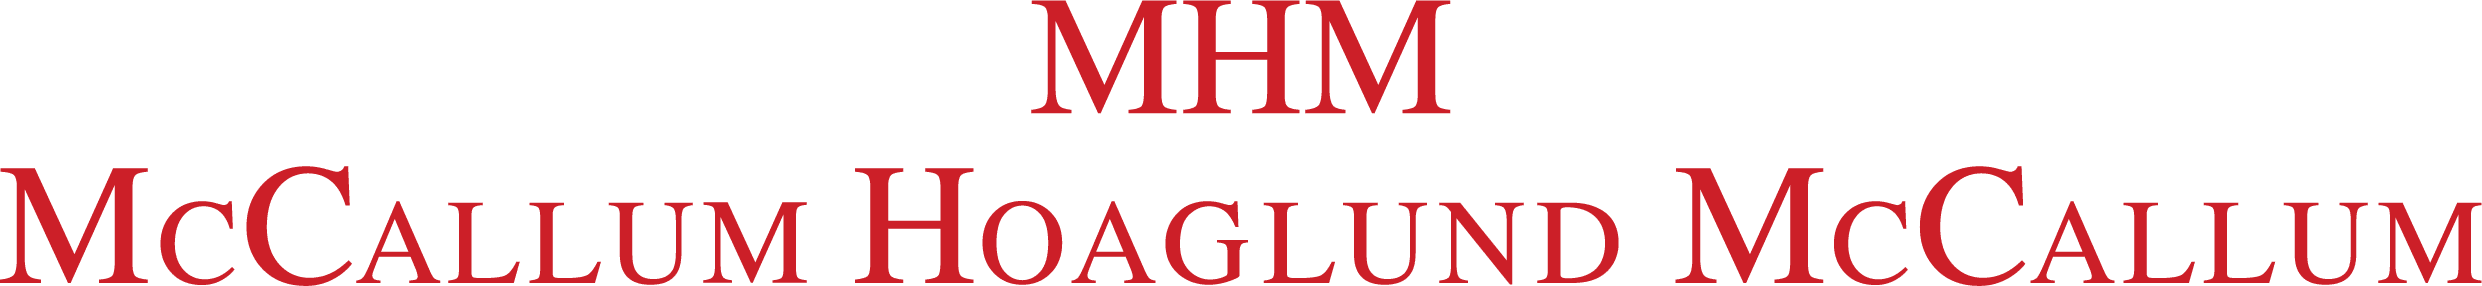 McCallum, Hoaglund, & McCallum Logo